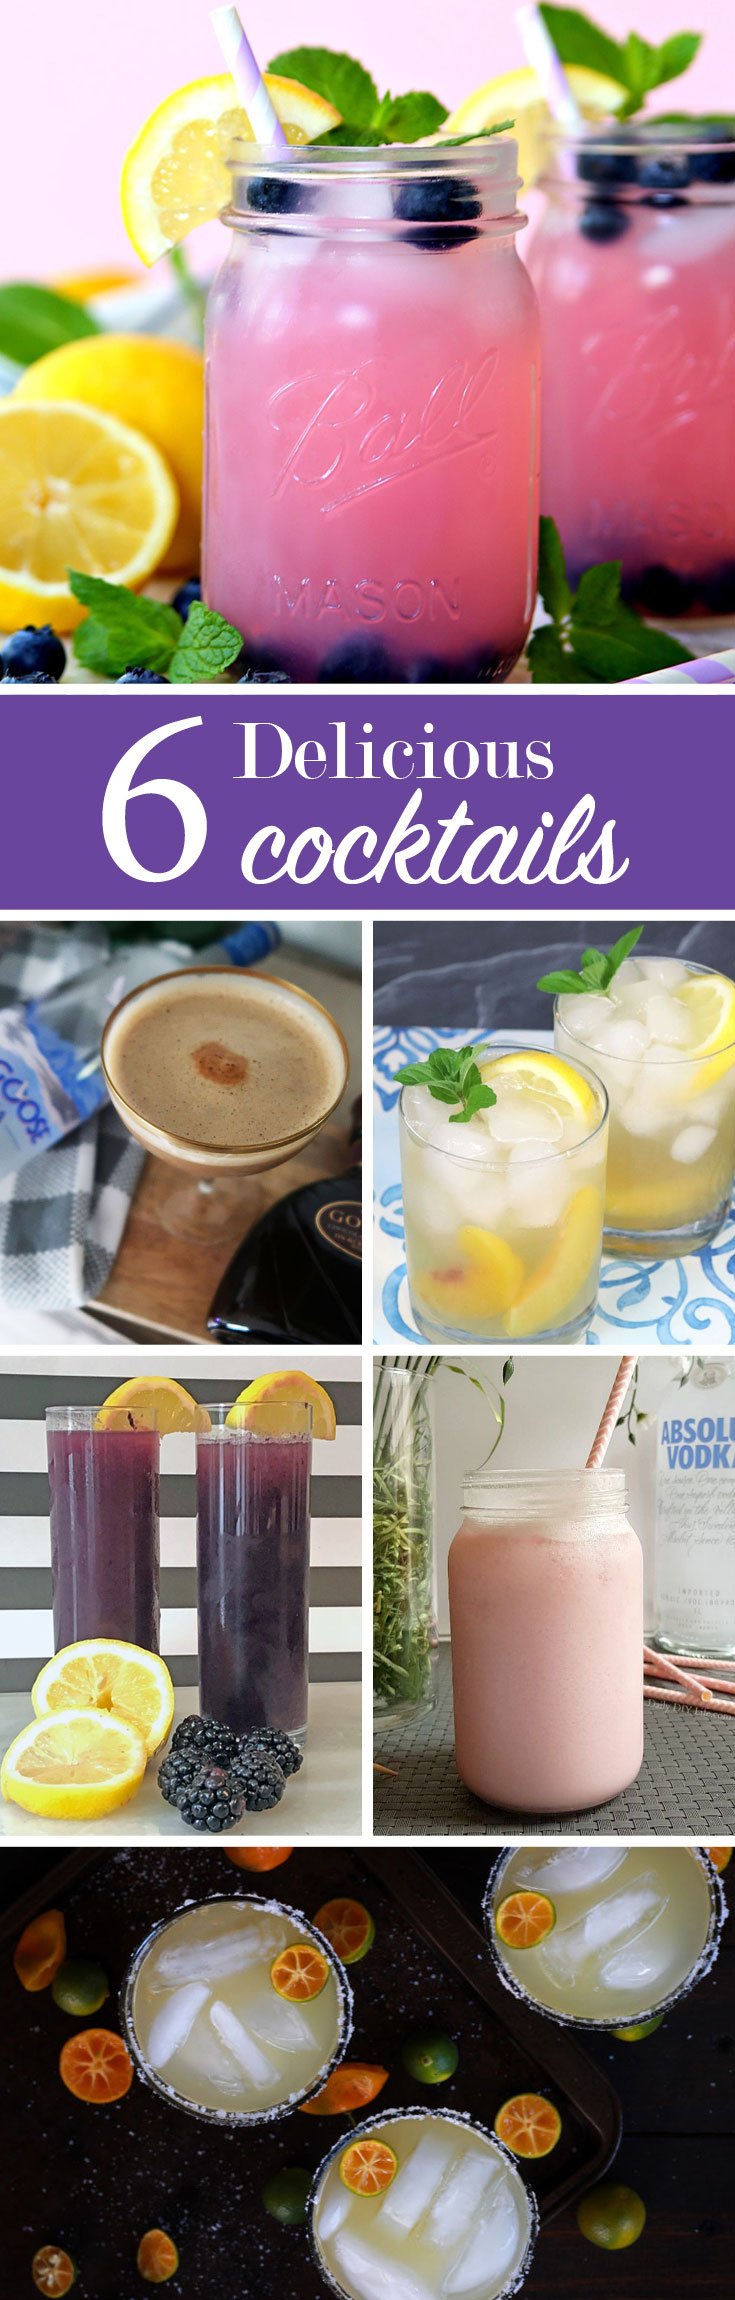 6 Delicious Cocktails recipe list